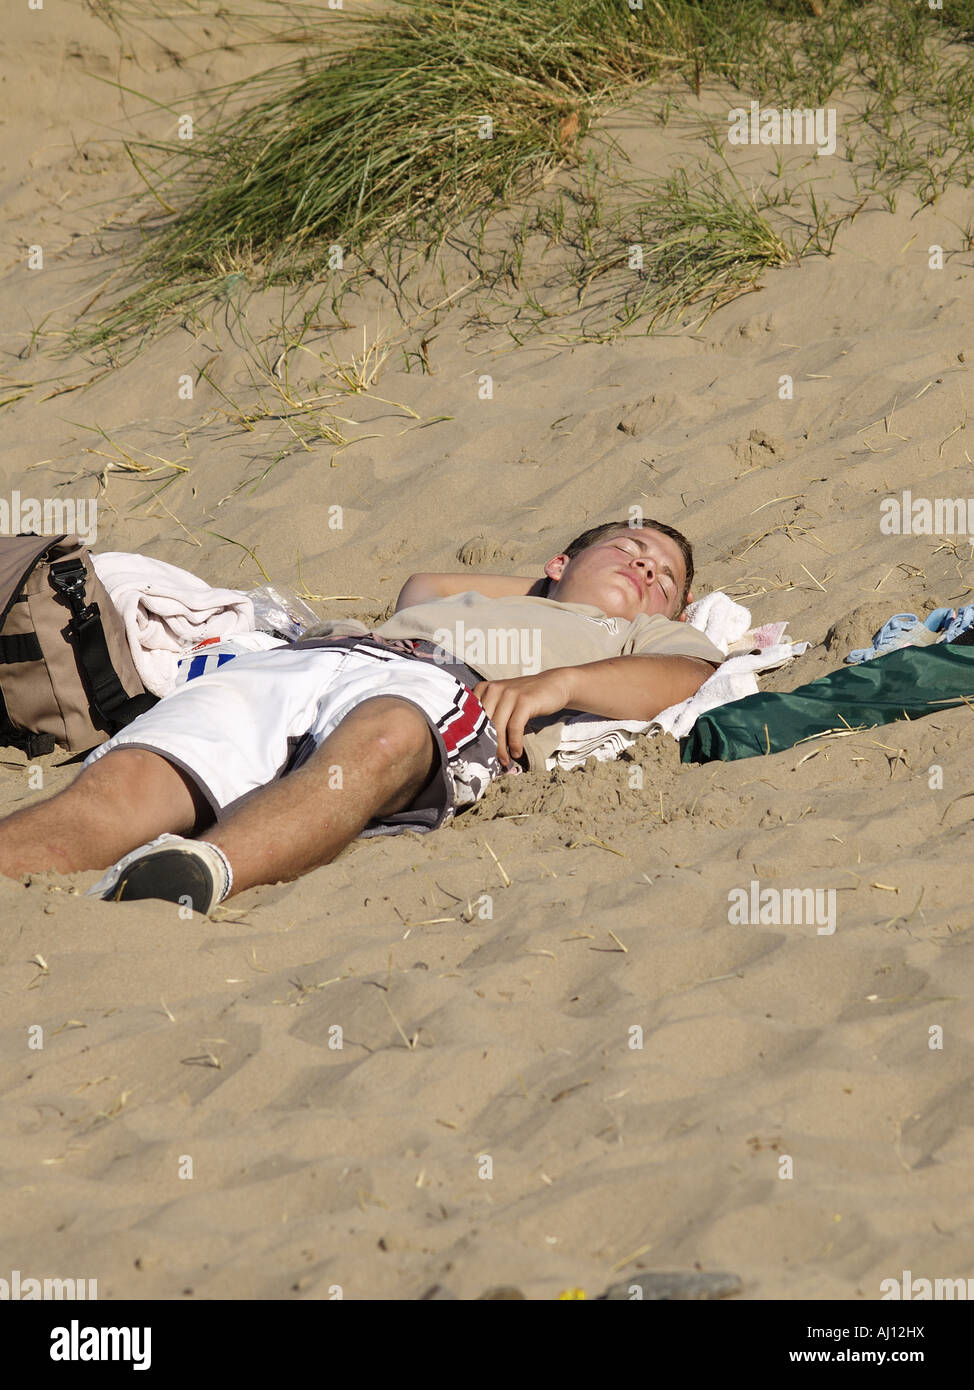 Teen At Nude Beach